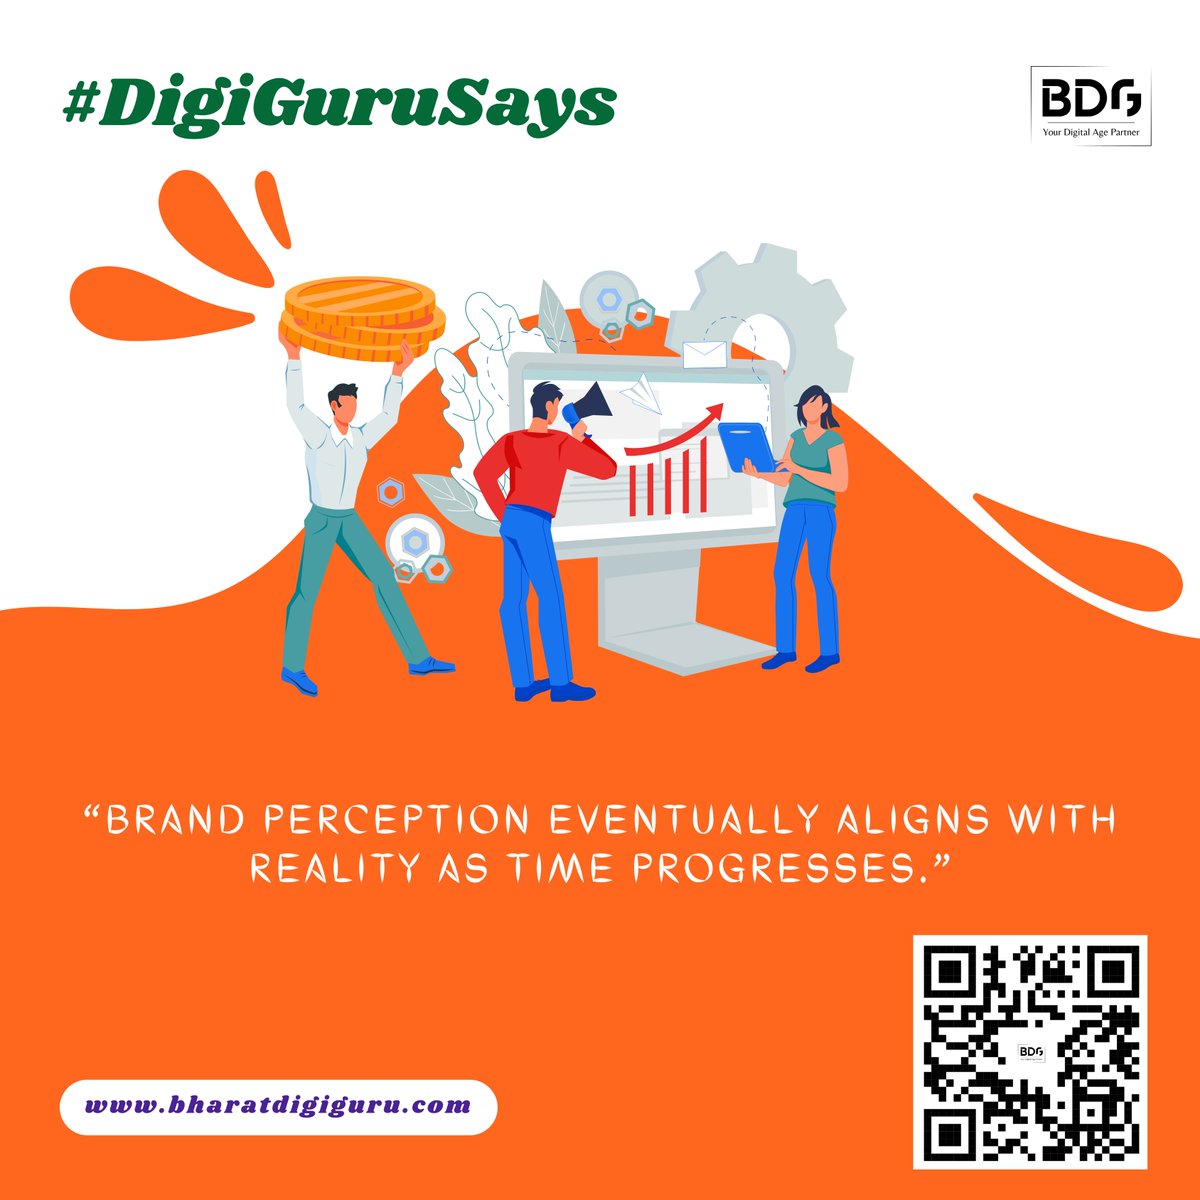 Brand perception eventually aligns with reality as time progresses.

- Bharat DigiGuru

#DigiGuruSays #BharatDigiGuru #piday #happypiday #maibhibanarasichap #bdgpic #dailypost #dailypic